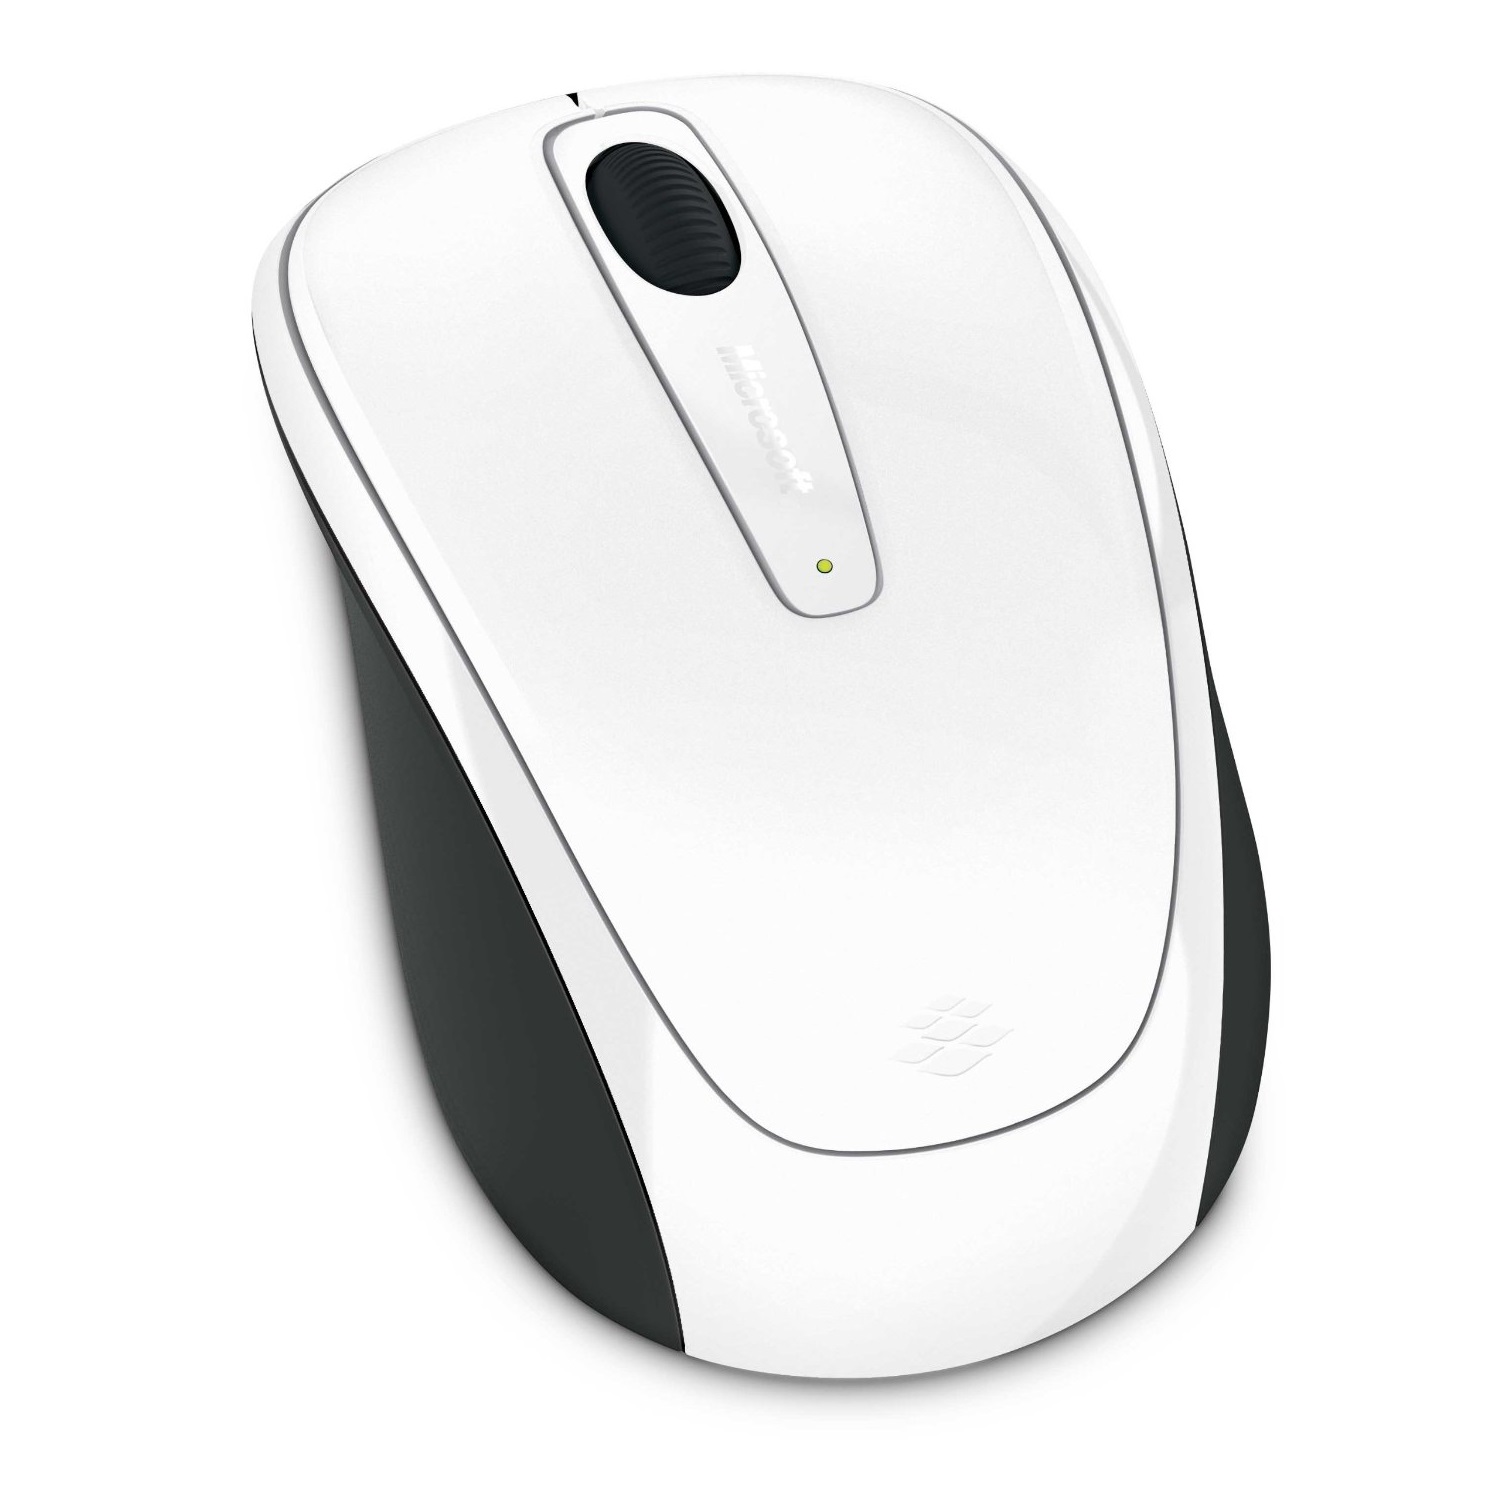 Mouse Microsoft Mobile 3500 fara fir, alb